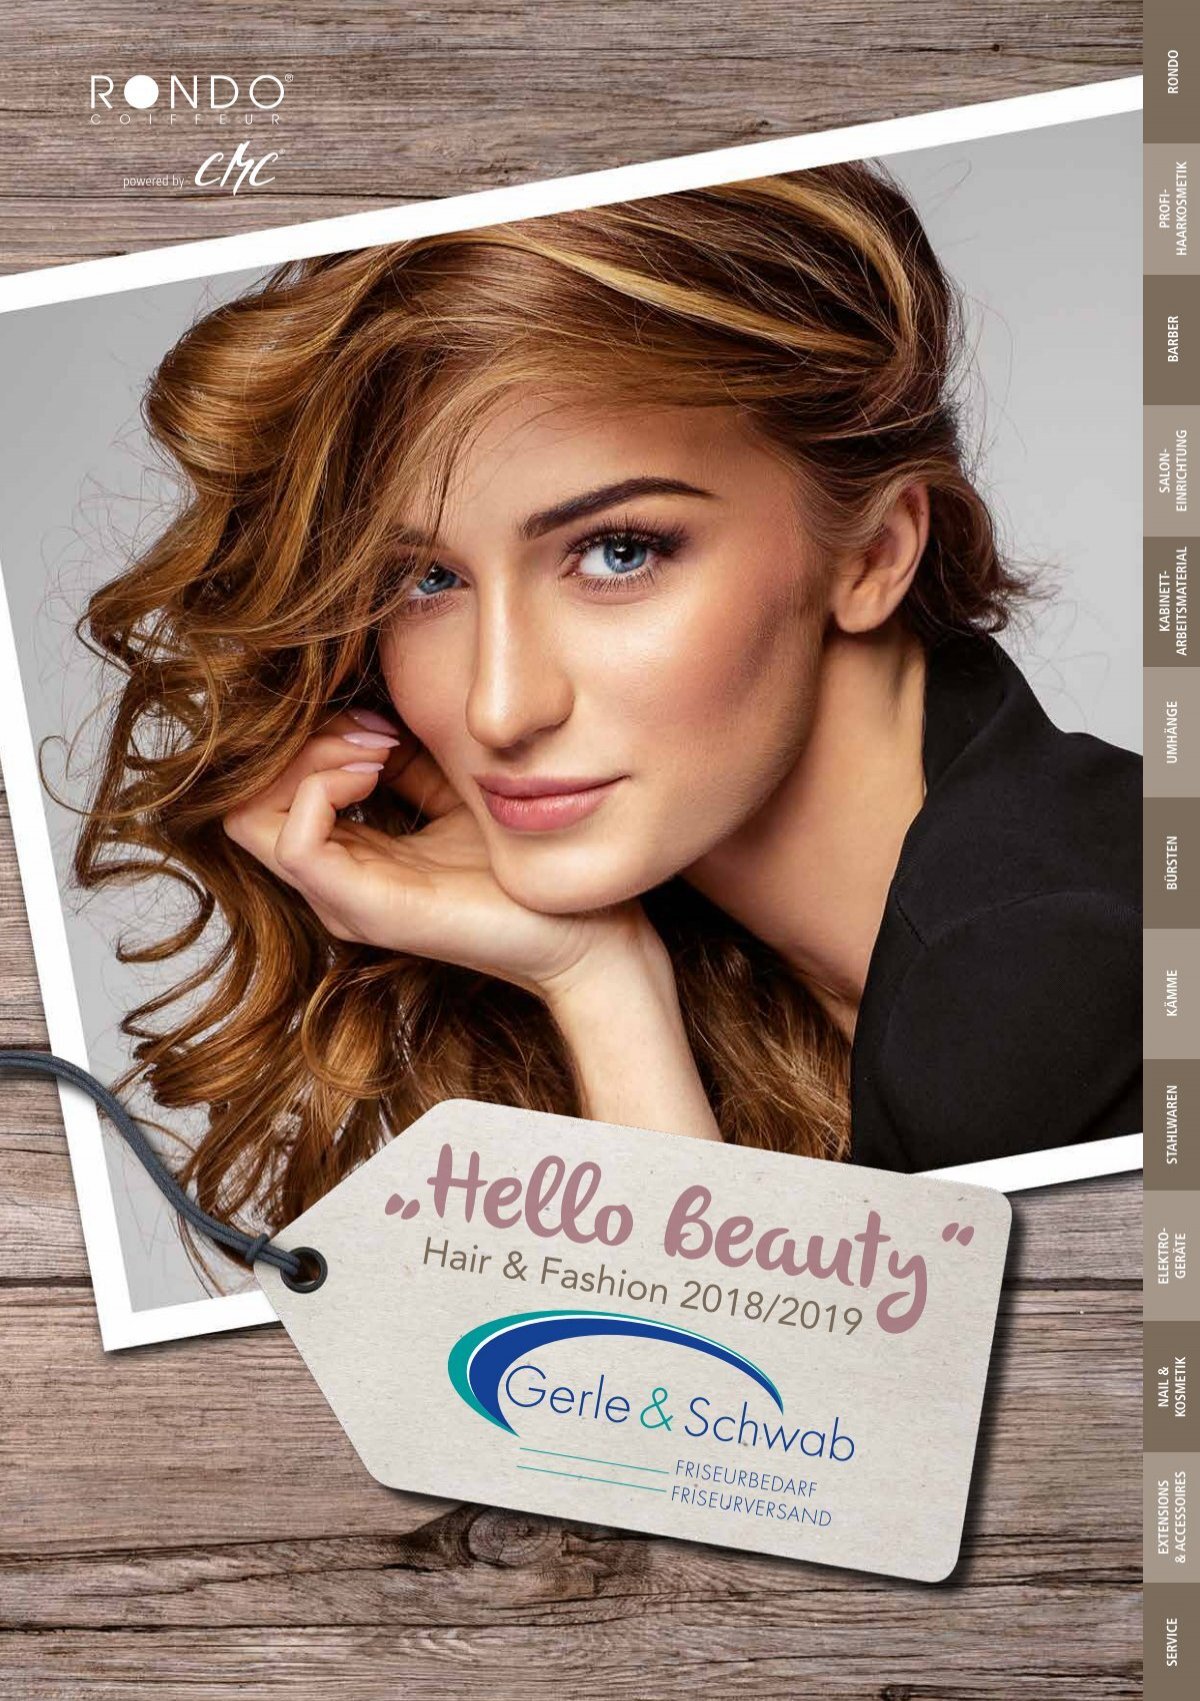 Gerle&Schwab "Hello Beauty" - & Fashion 2018/2019 Hair